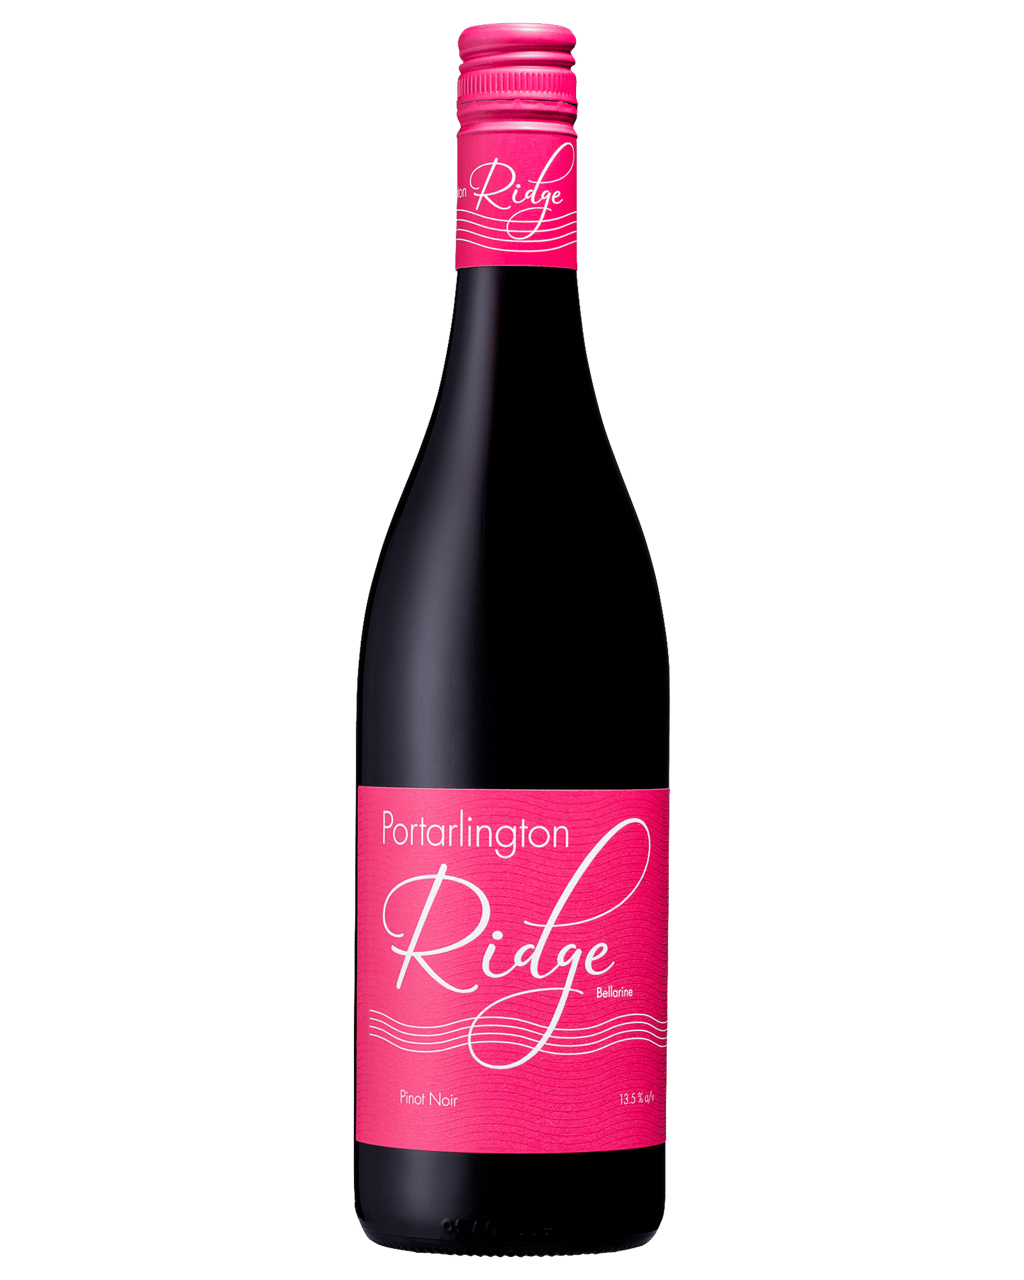 Portarlington Ridge Pinot Noir - Boozy